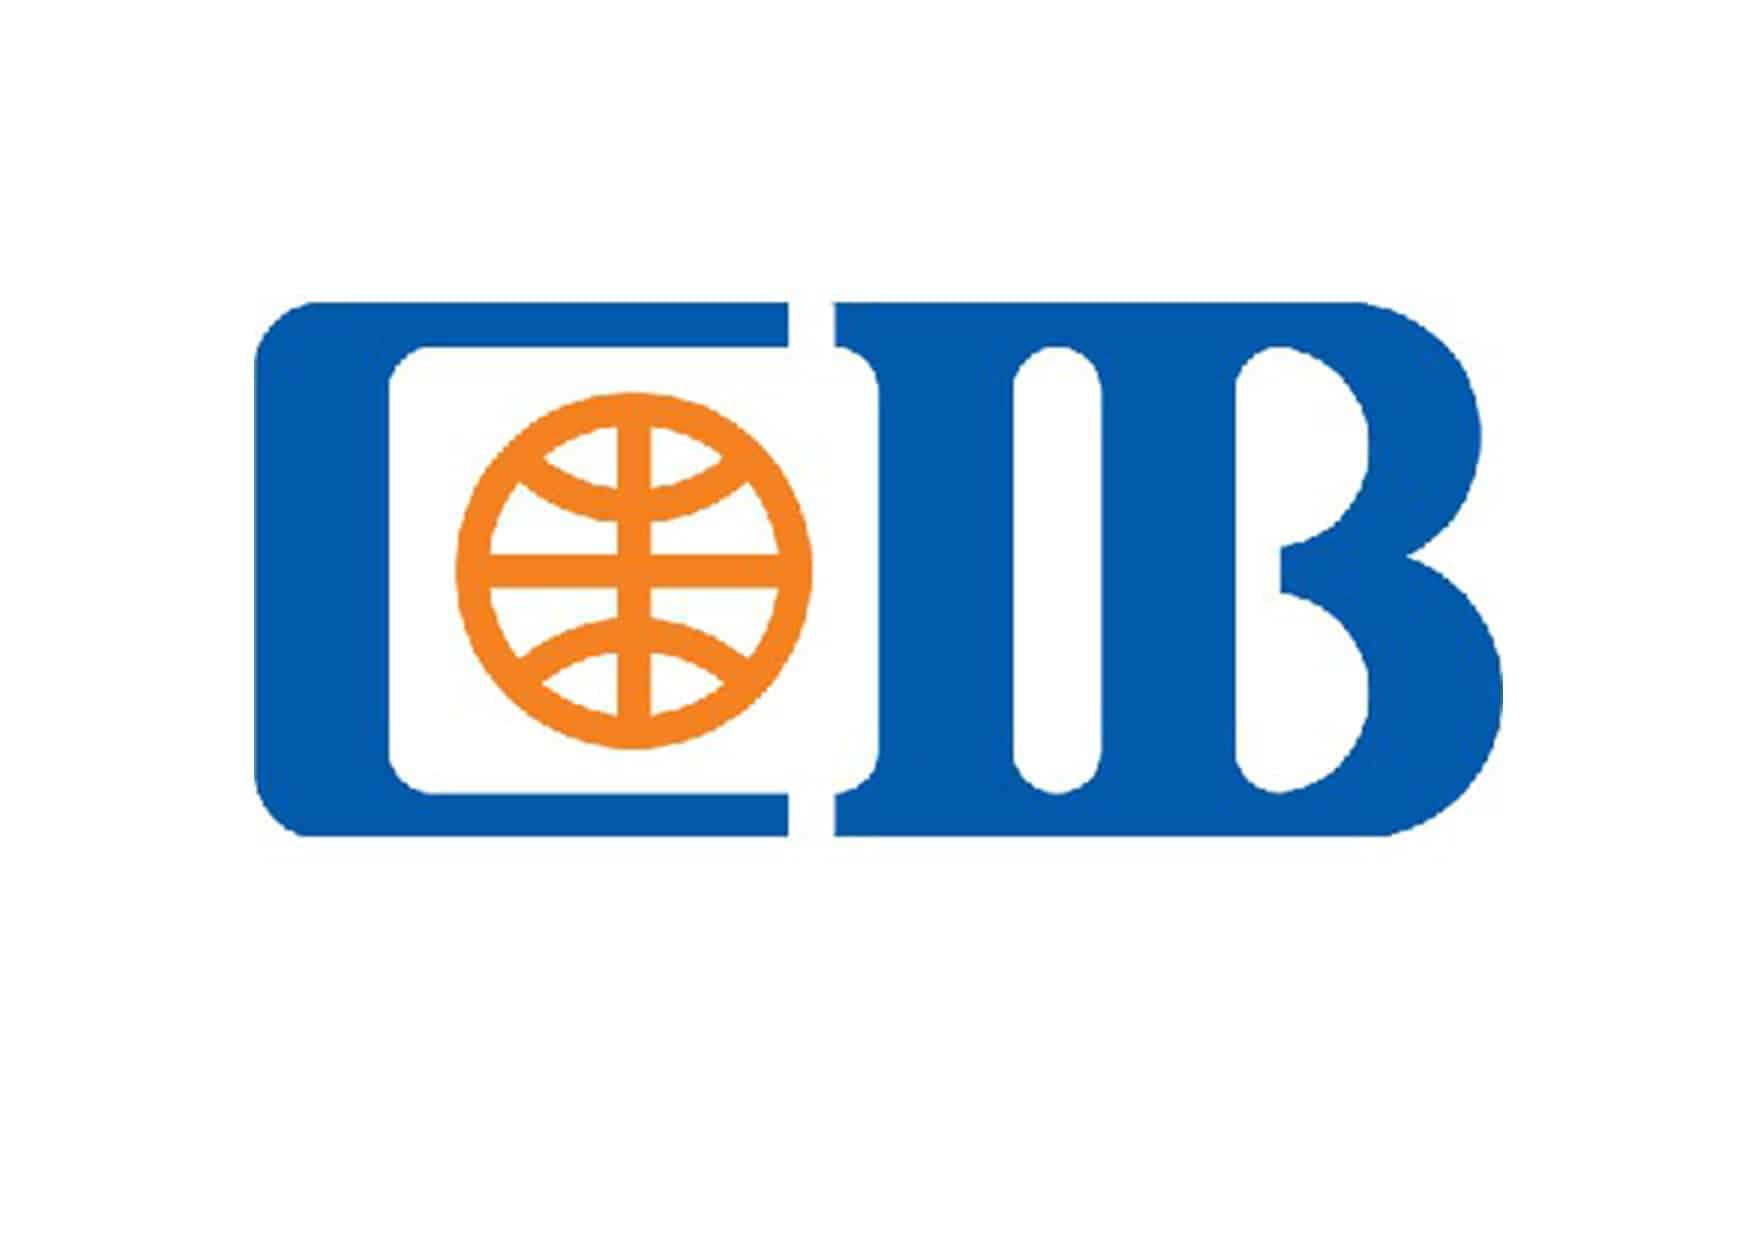 CIB يطرح شهادة ادخار بعائد 14% ثابت لمدة 4 سنوات